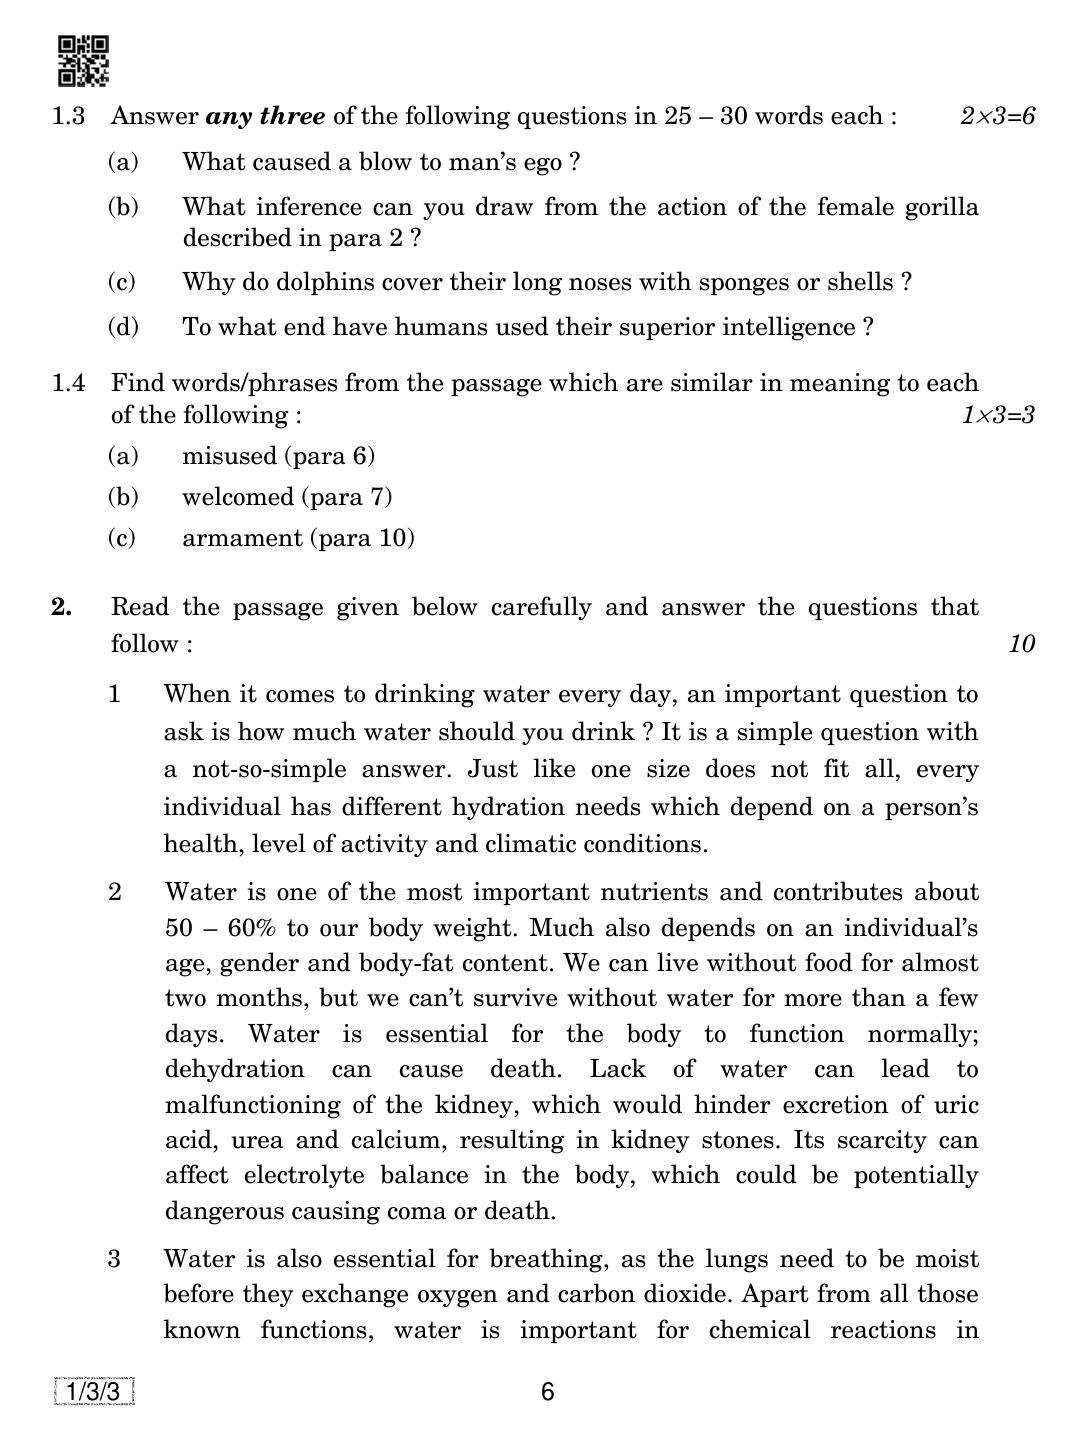 CBSE Class 12 1-3-3 English Core 2019 Question Paper - Page 6